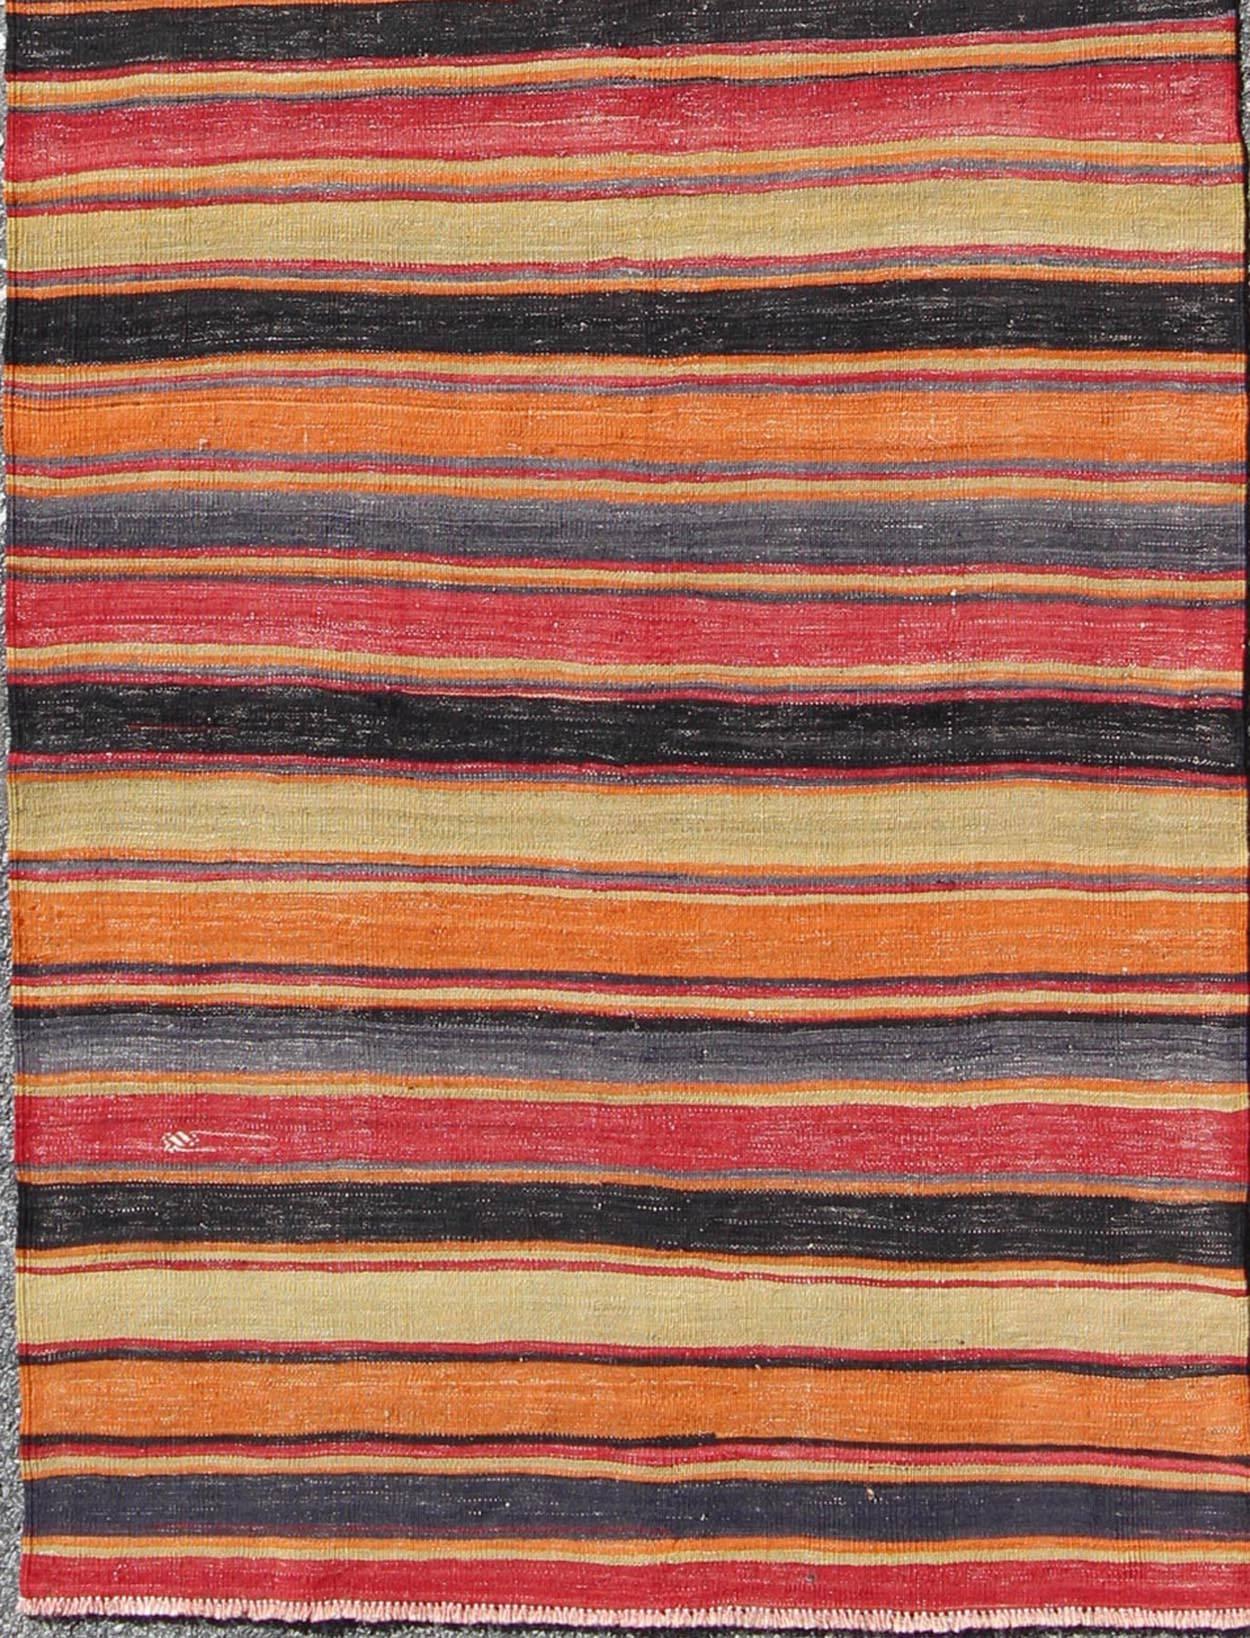 Multicolored Vintage Turkish Kilim rug with Horizontal Stripe Design, rug emd-95026, country of origin / type: Turkey / Kilim, circa mid-20th century

Featuring a repeating horizontal stripe design, this unique midcentury Kilim showcases an array